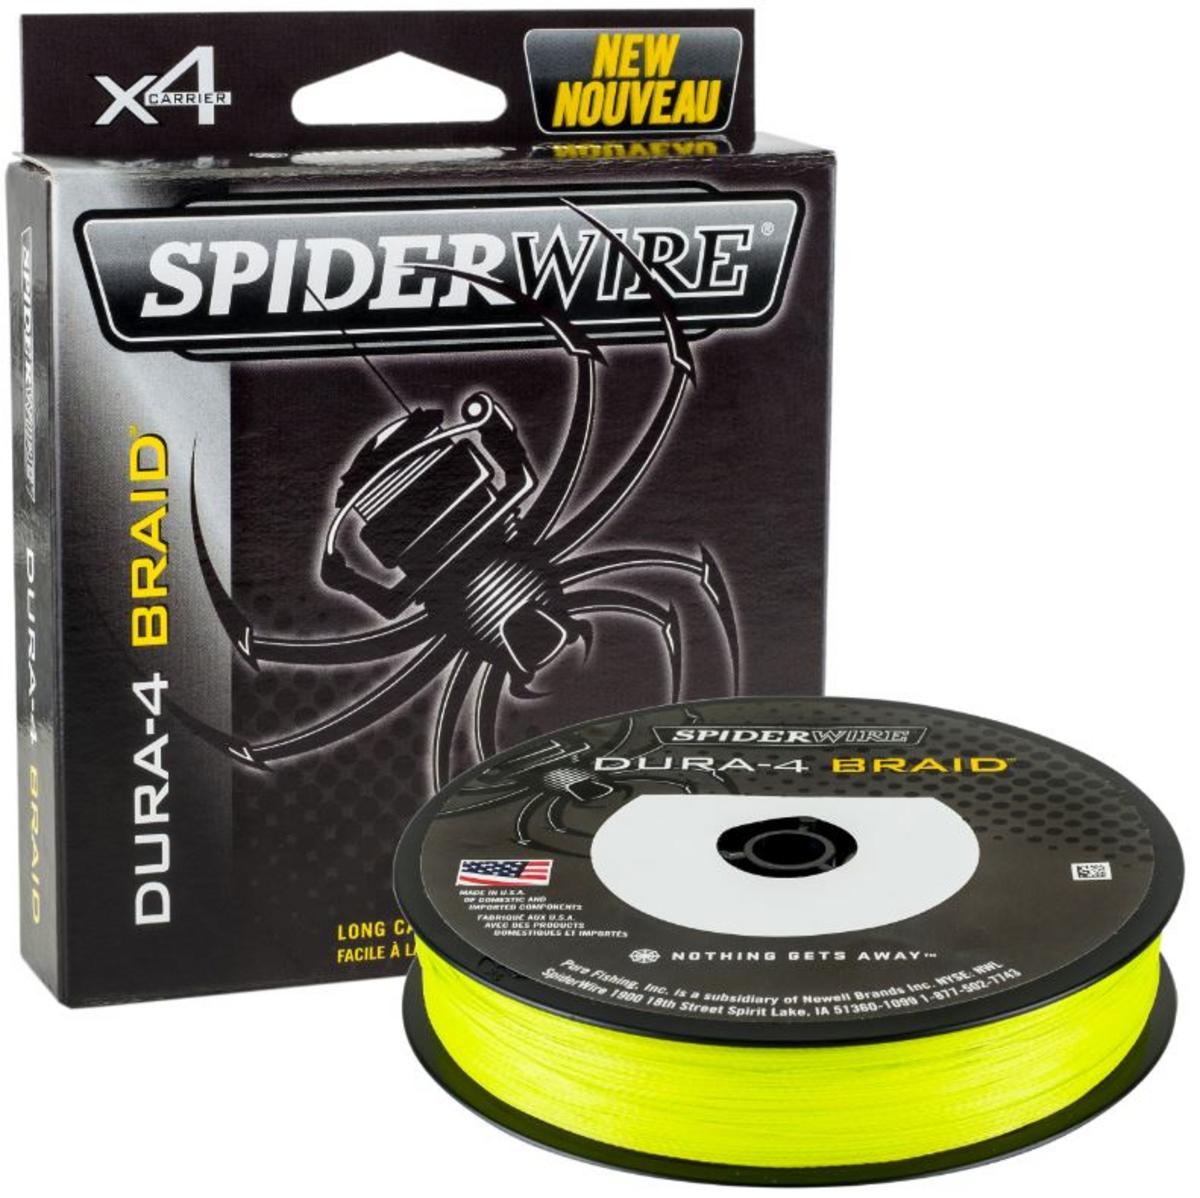 spiderwire-dura-4